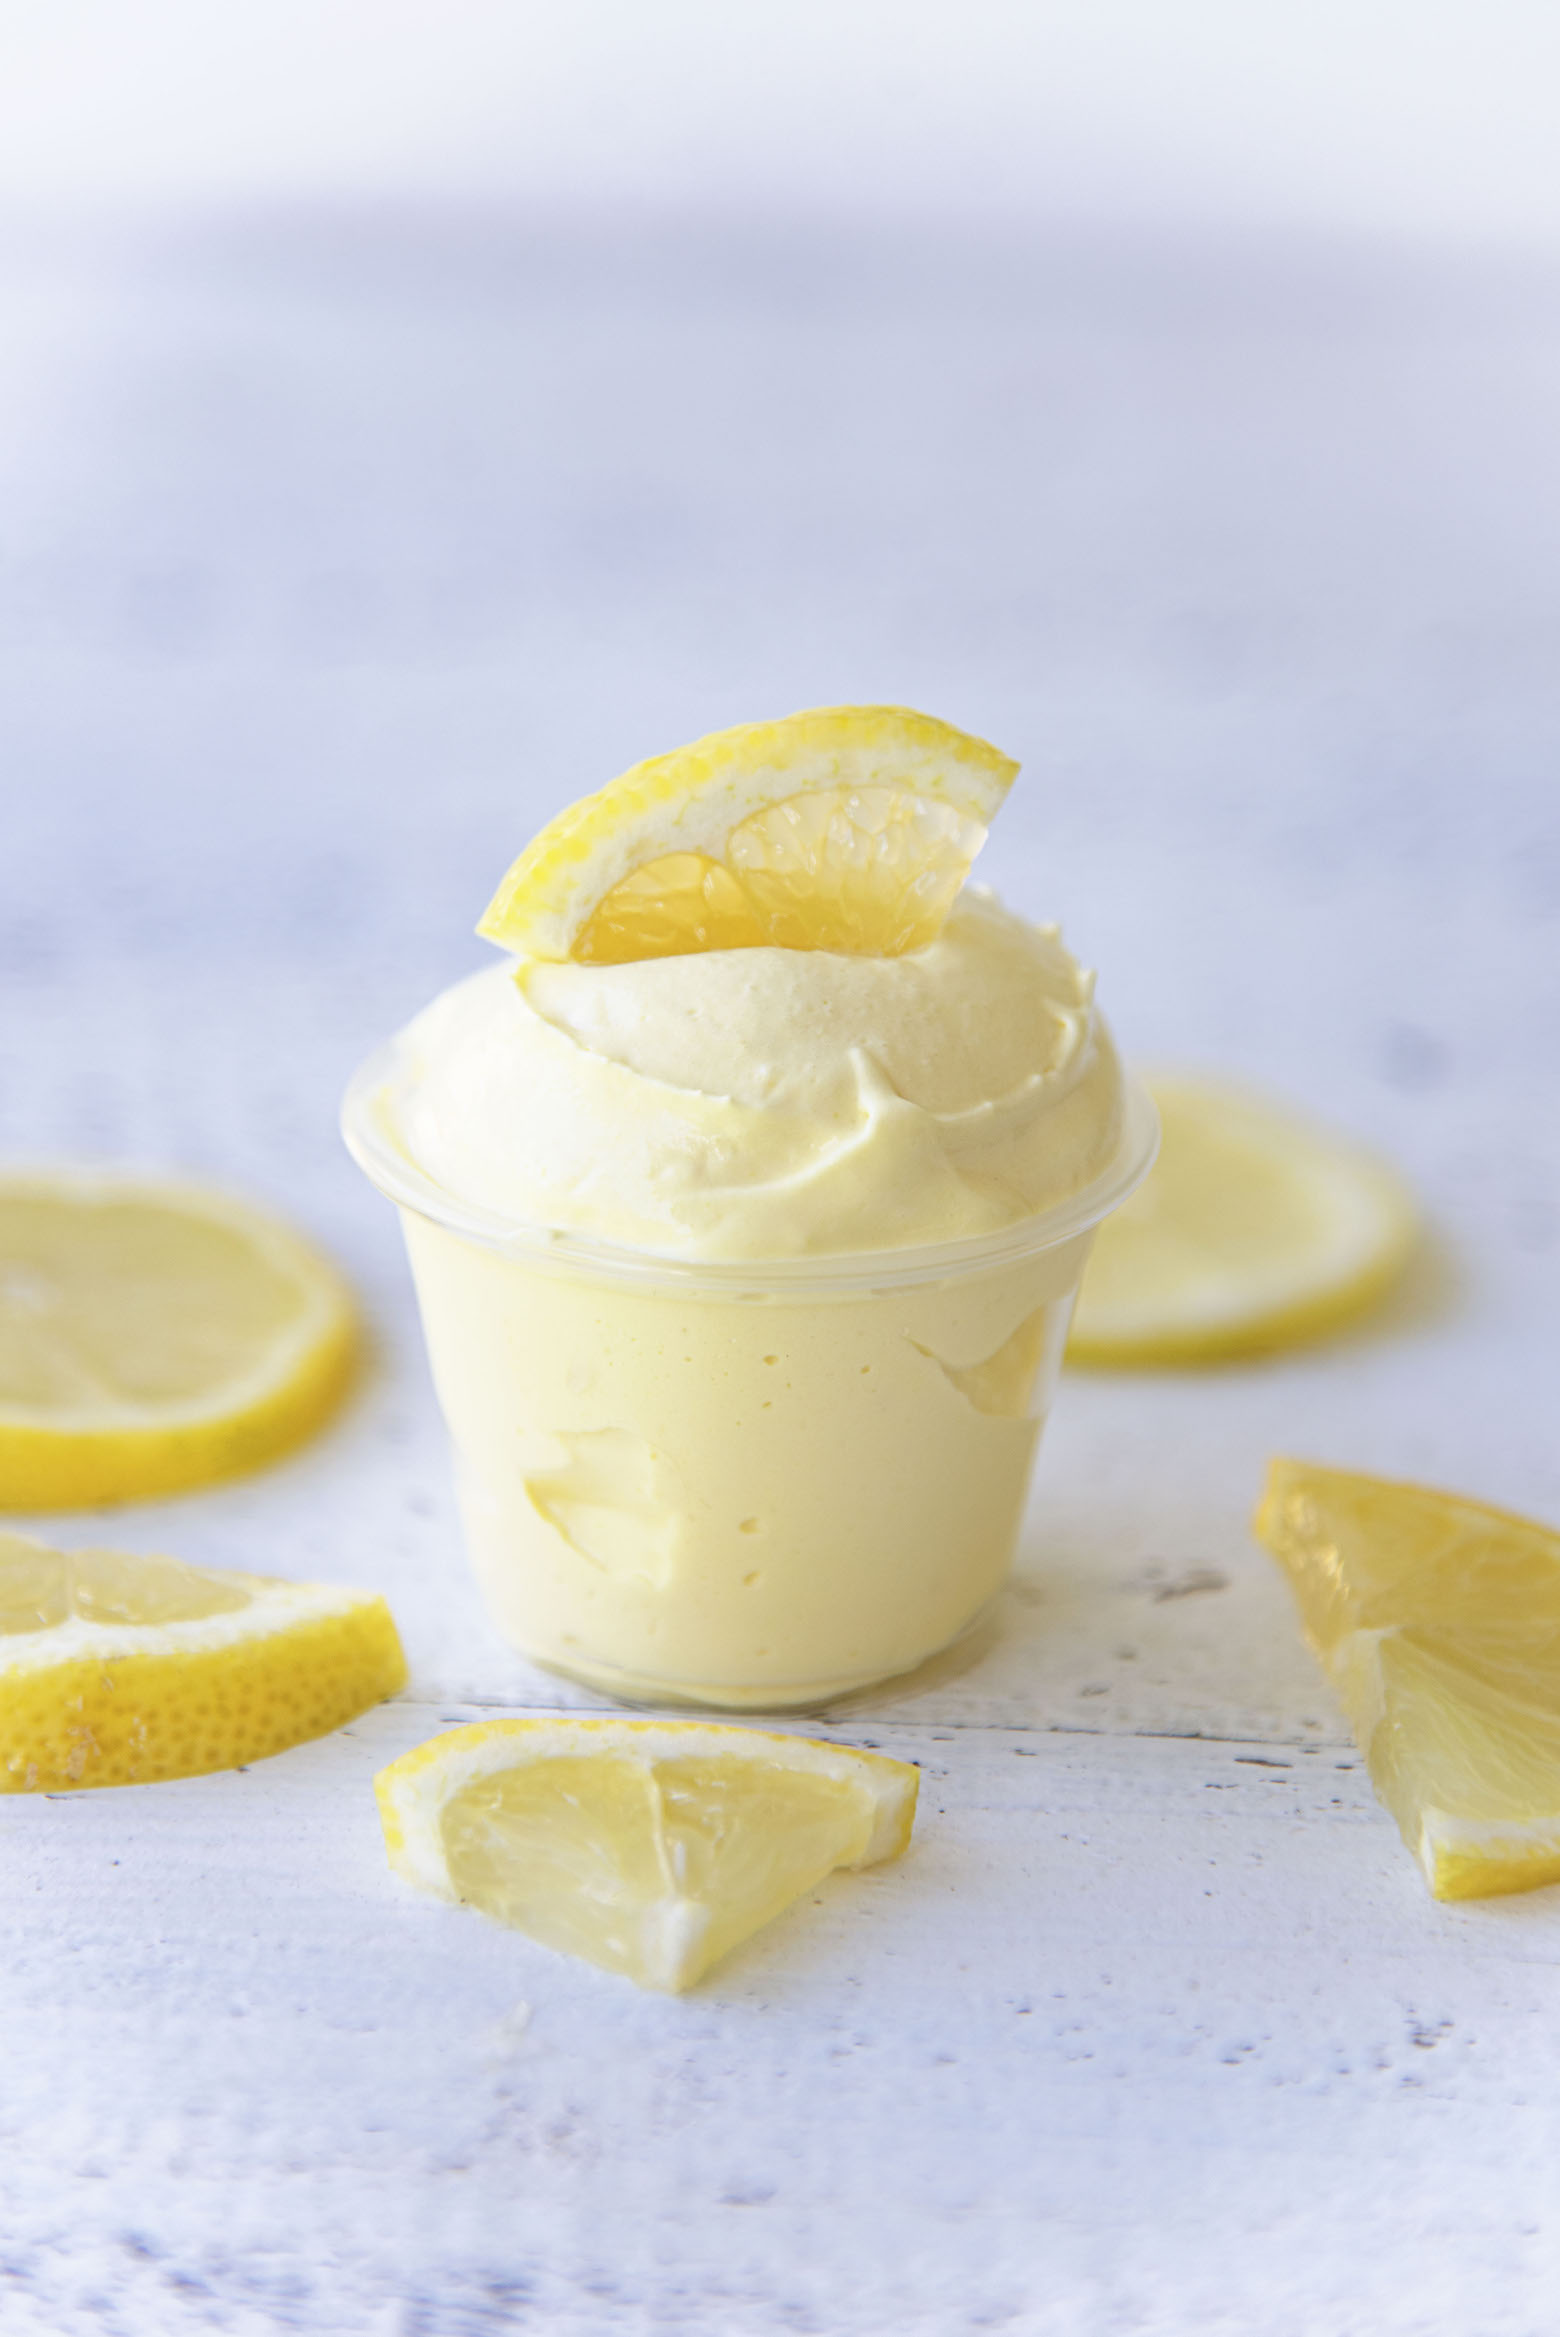 Single pudding shot with lemon slices around it